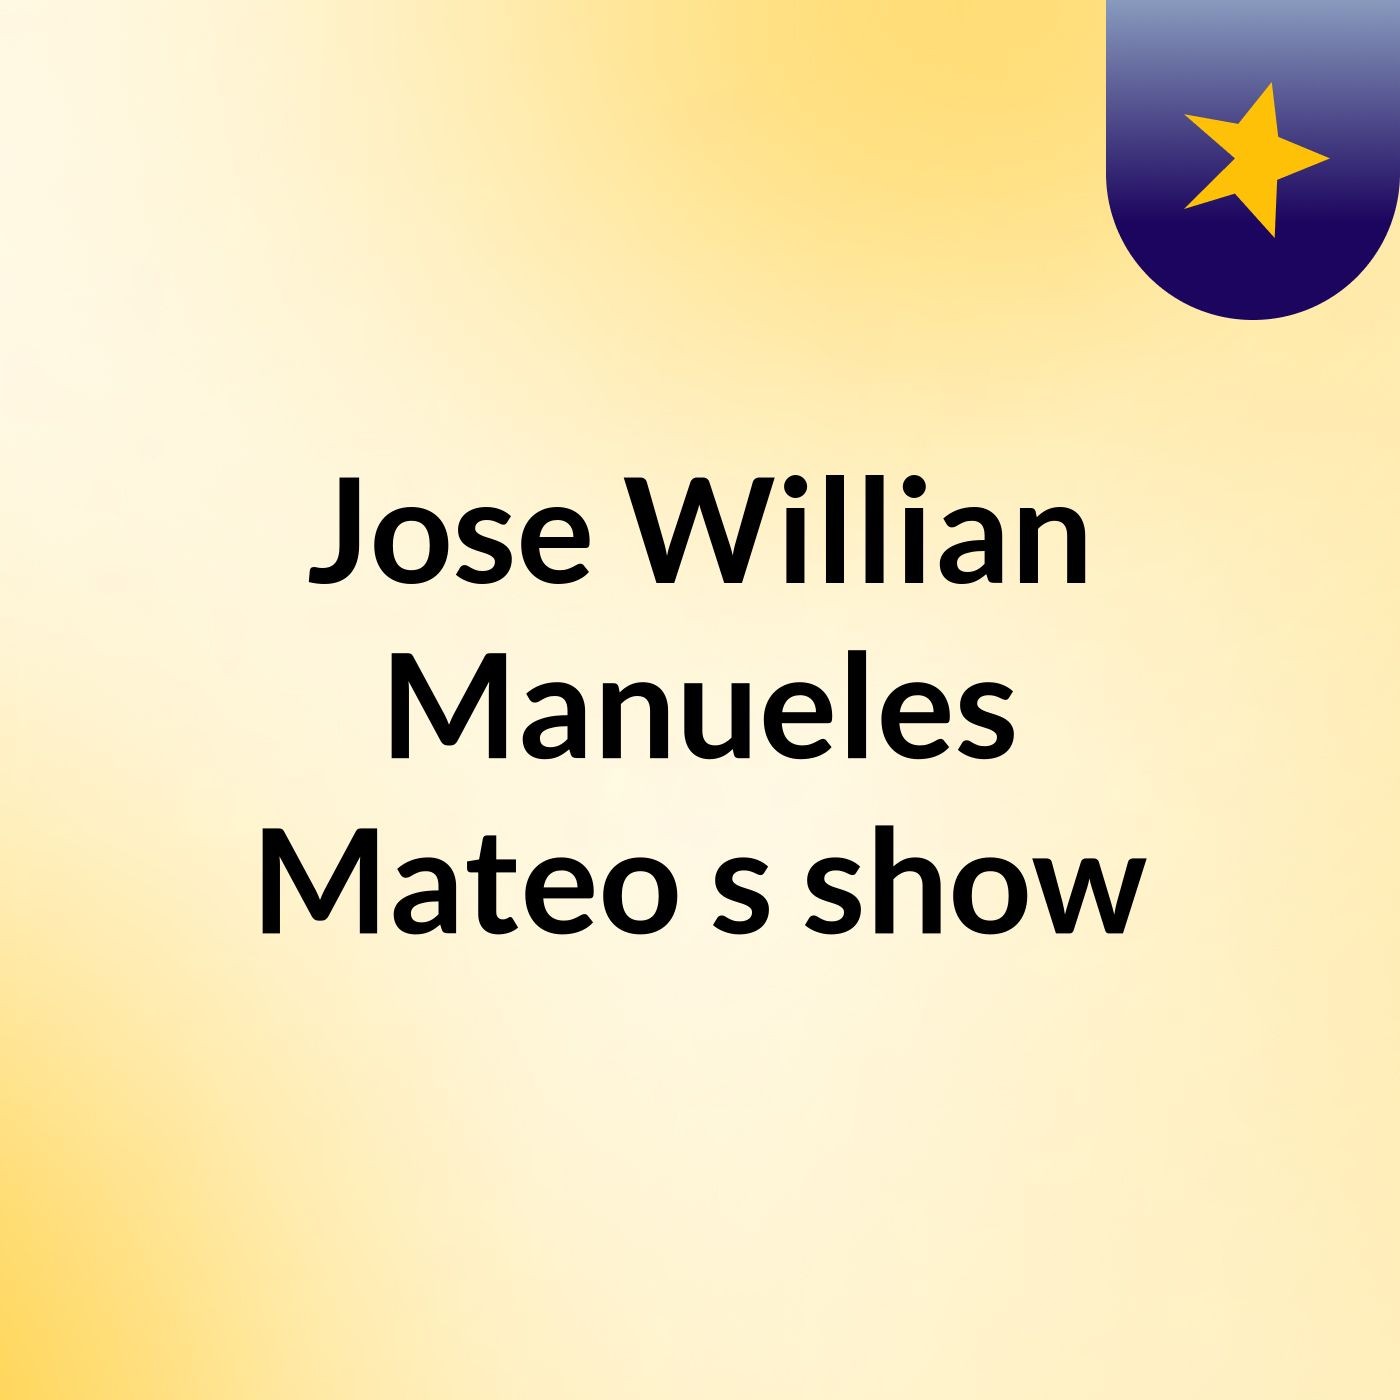 Jose Willian Manueles Mateo's show